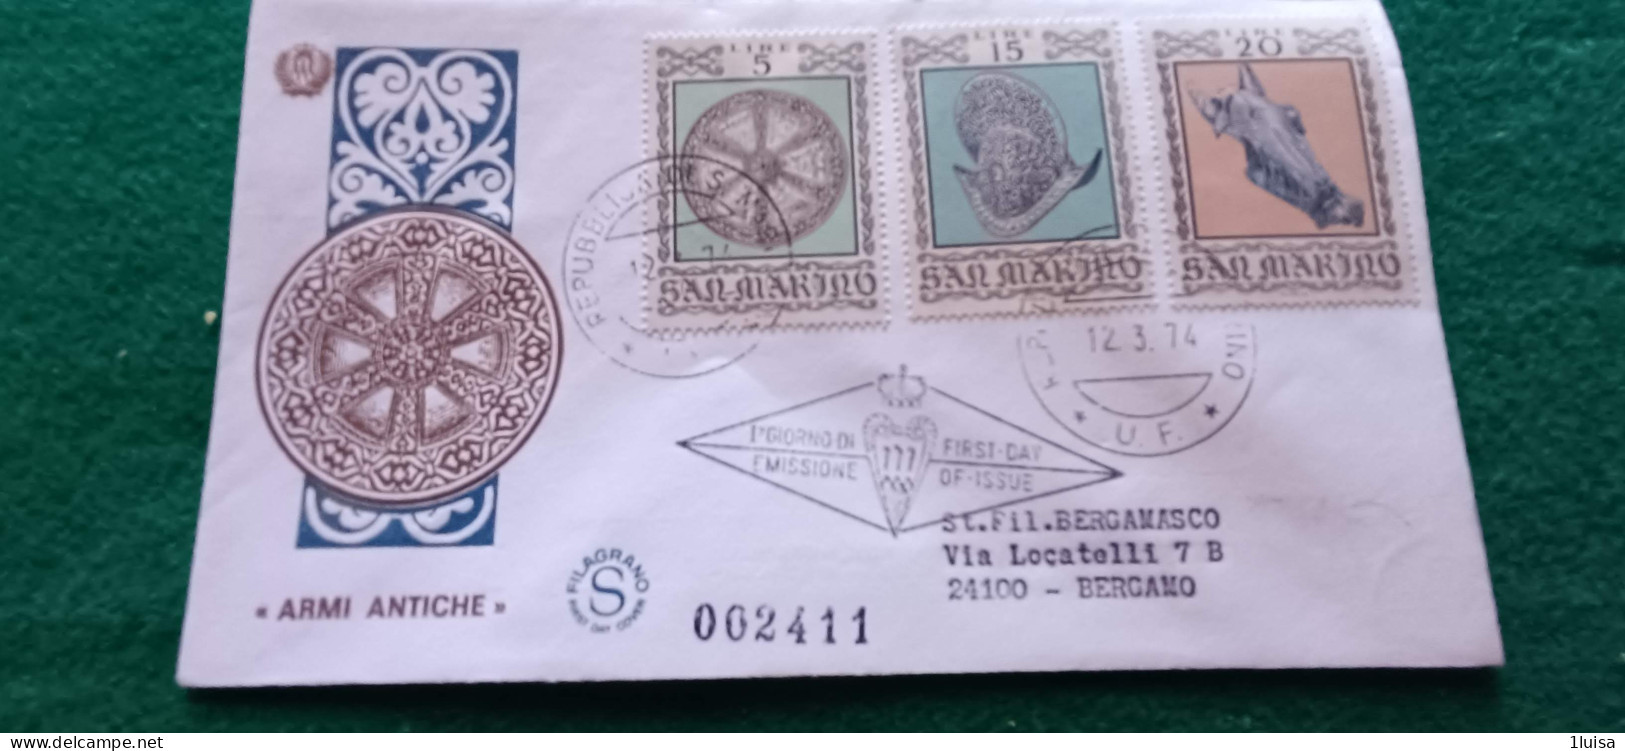 SAN MARINO 12/3/74 Armature Medioevali - Express Letter Stamps